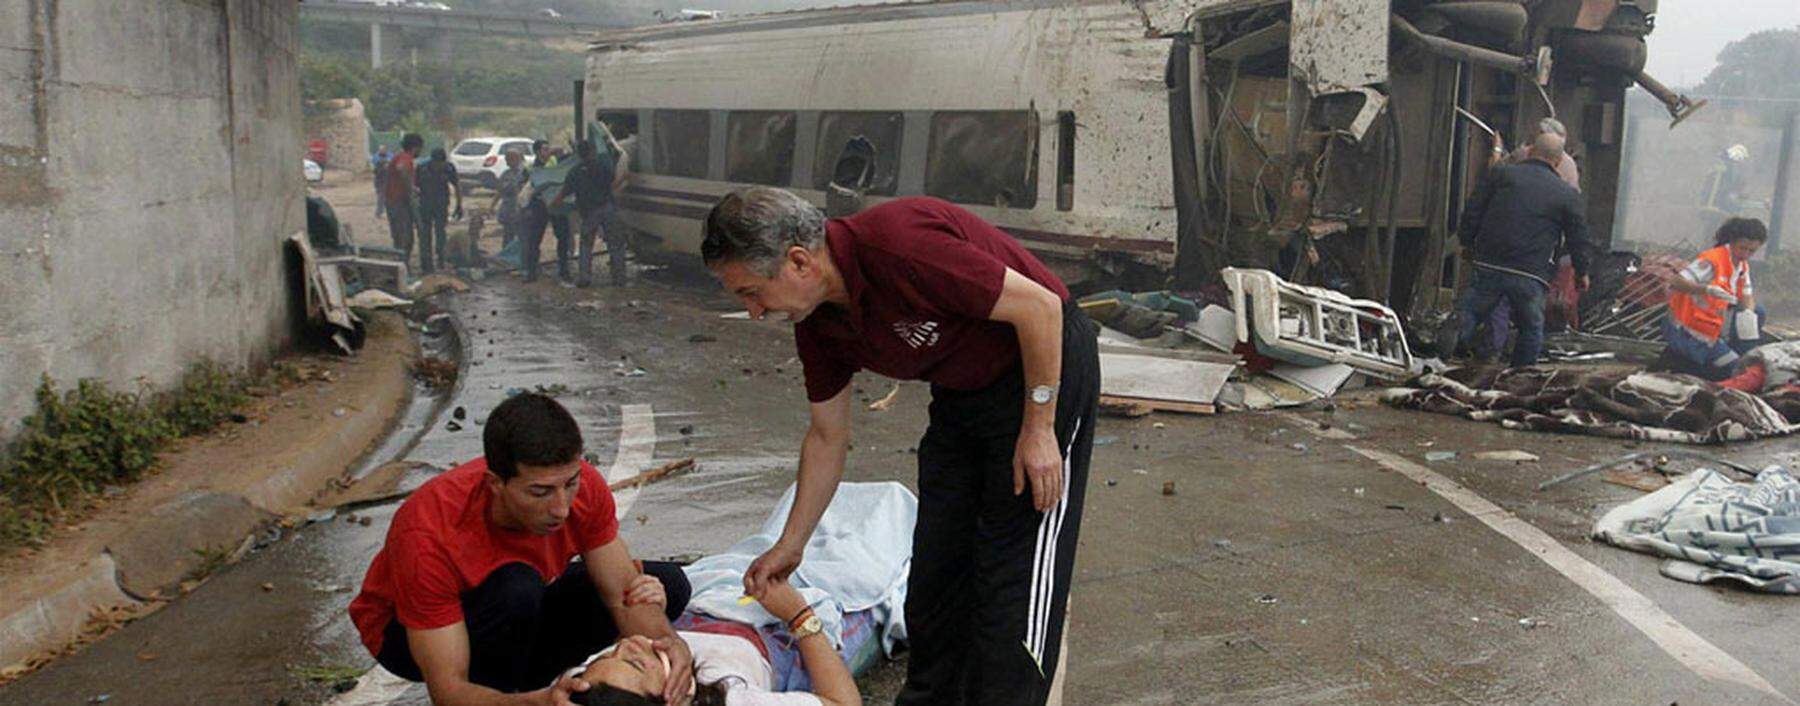 Victims receive help after a train crashed near Santiago de Compostela